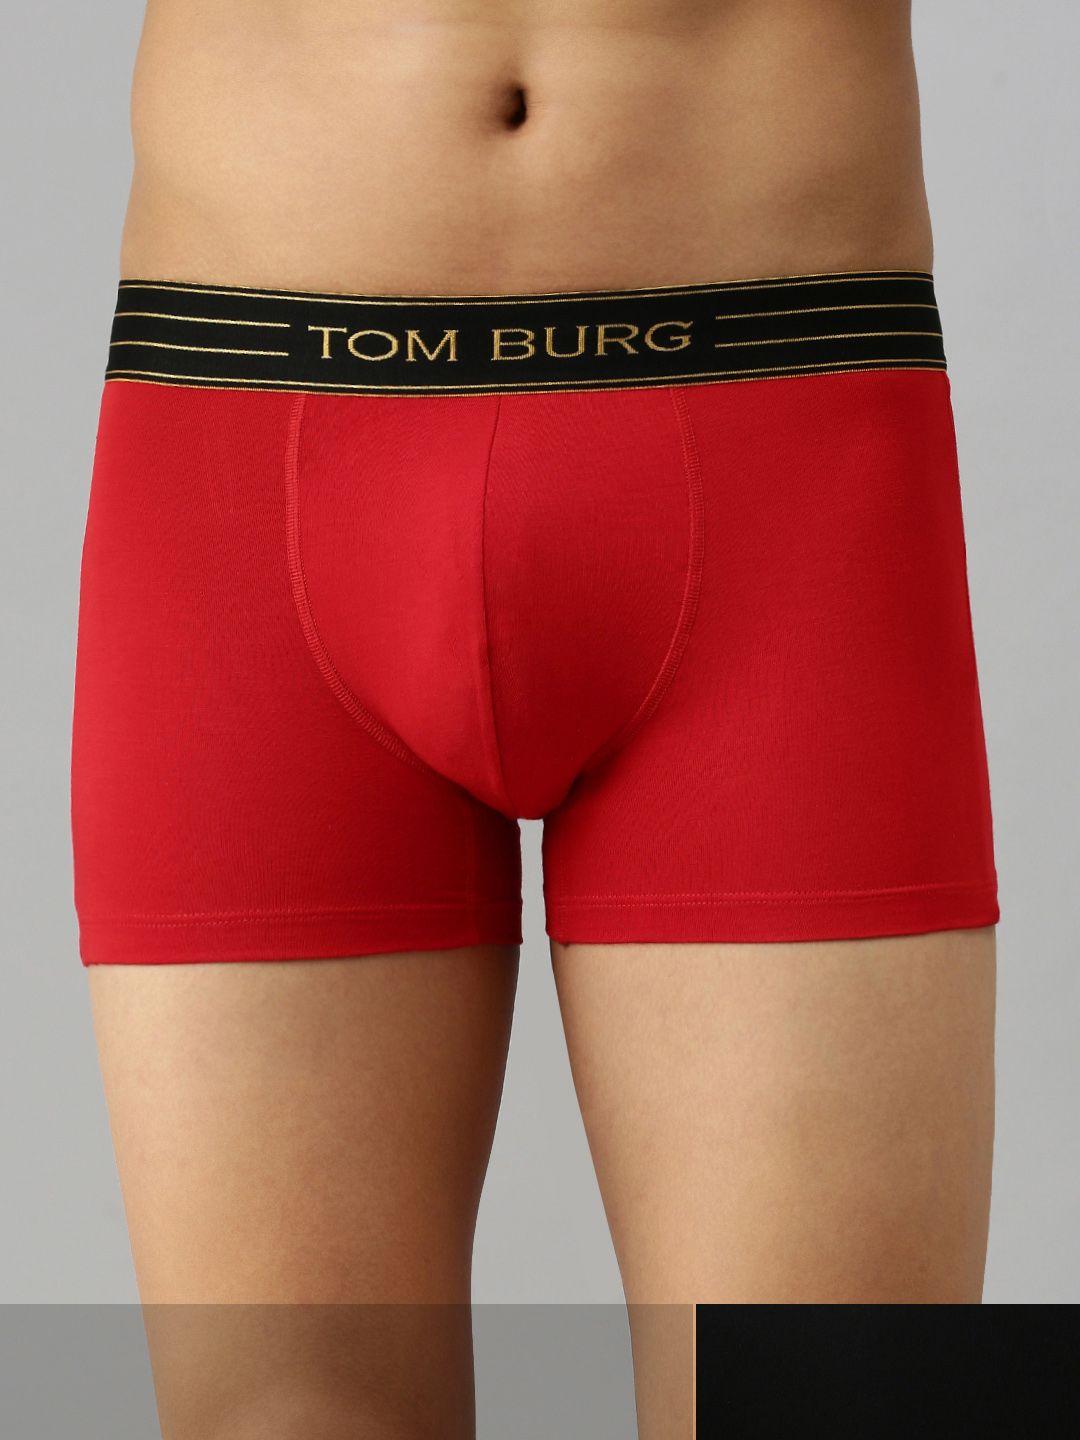 tom-burg-men-pack-of-2-solid-trunks-3044